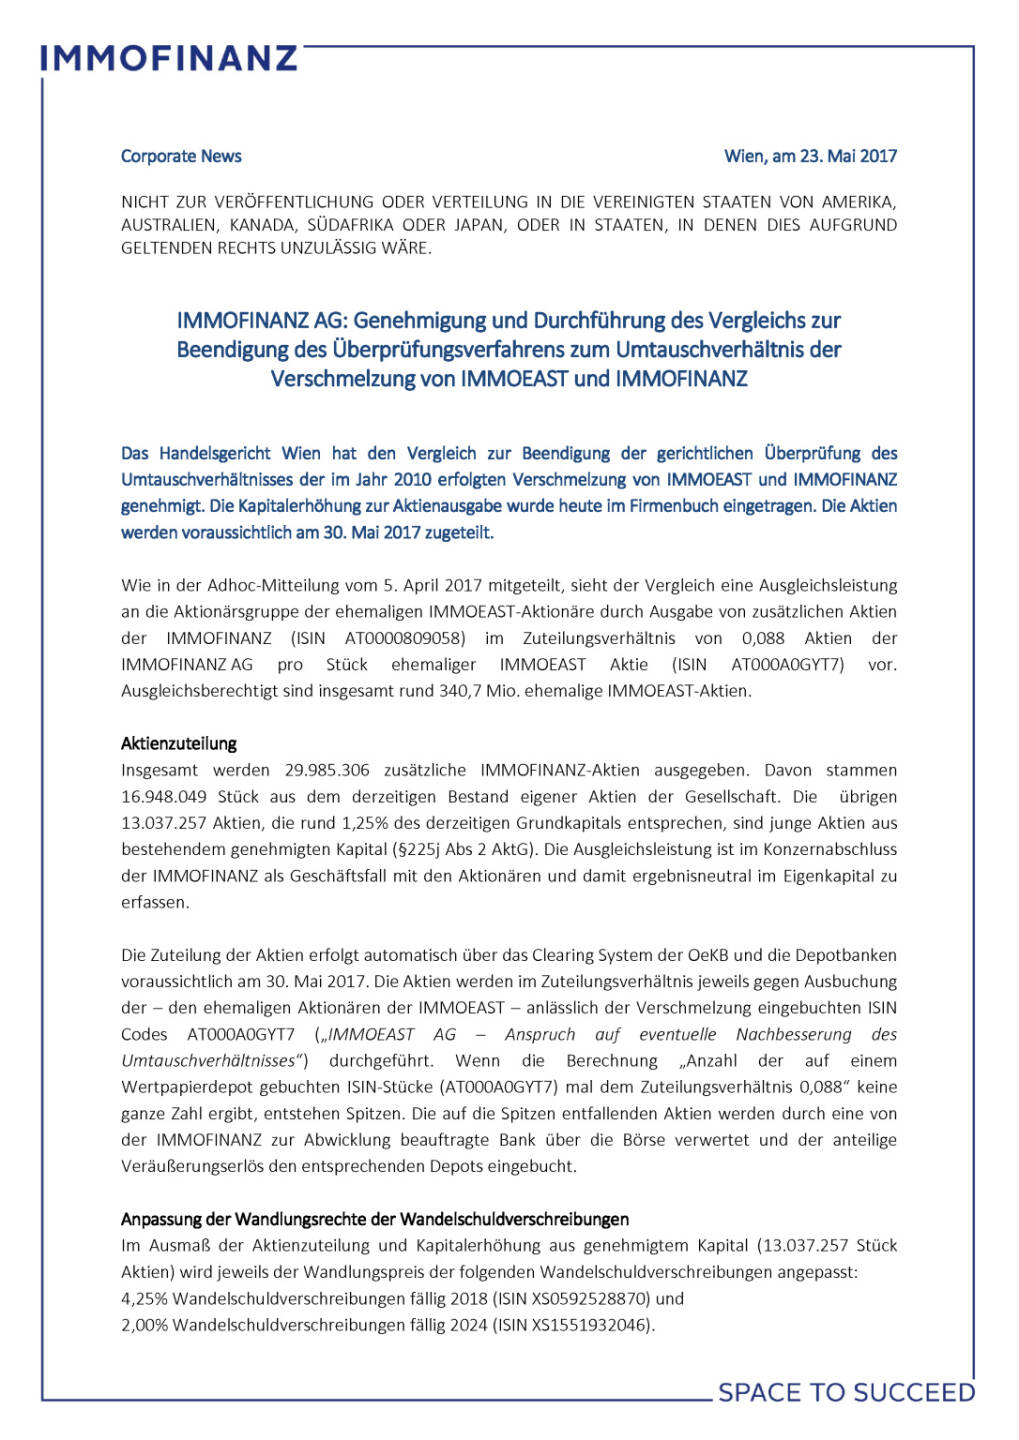 Handelsgericht Wien genehmigt Immofinanz-Vergleich, Seite 1/2, komplettes Dokument unter http://boerse-social.com/static/uploads/file_2261_handelsgericht_wien_genehmigt_immofinanz-vergleich.pdf